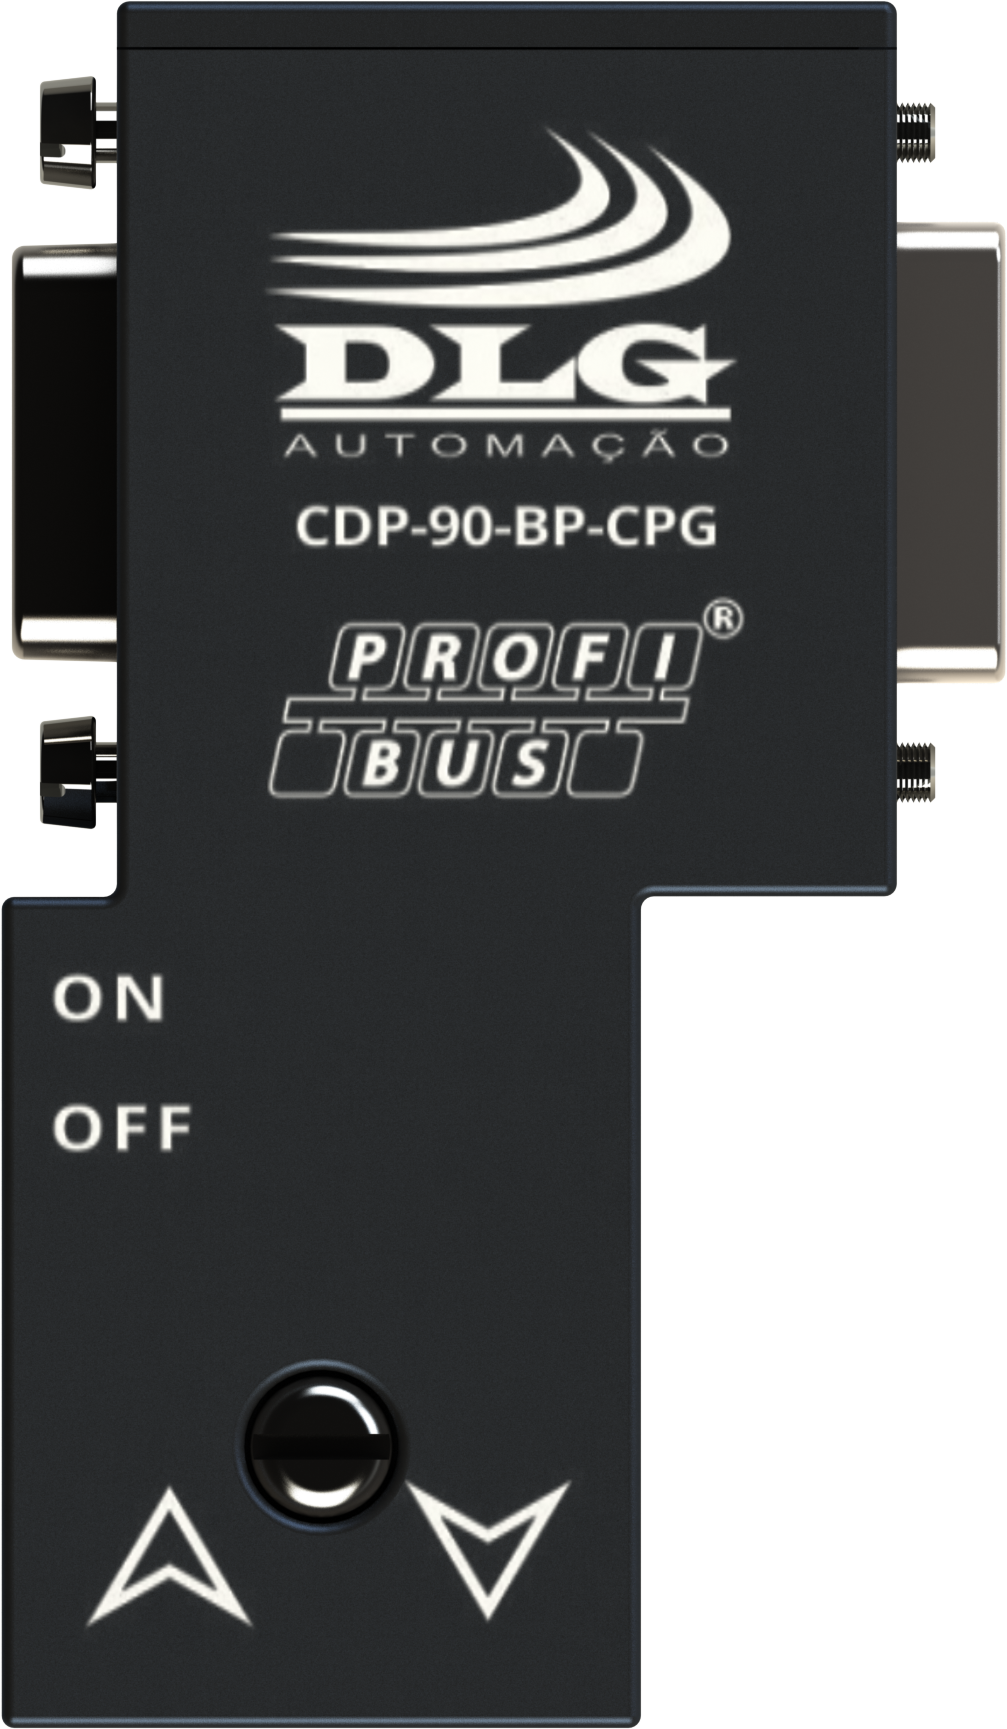 CDP-90-BP-CPG - Conector Profibus DP Metálico com Pig Back